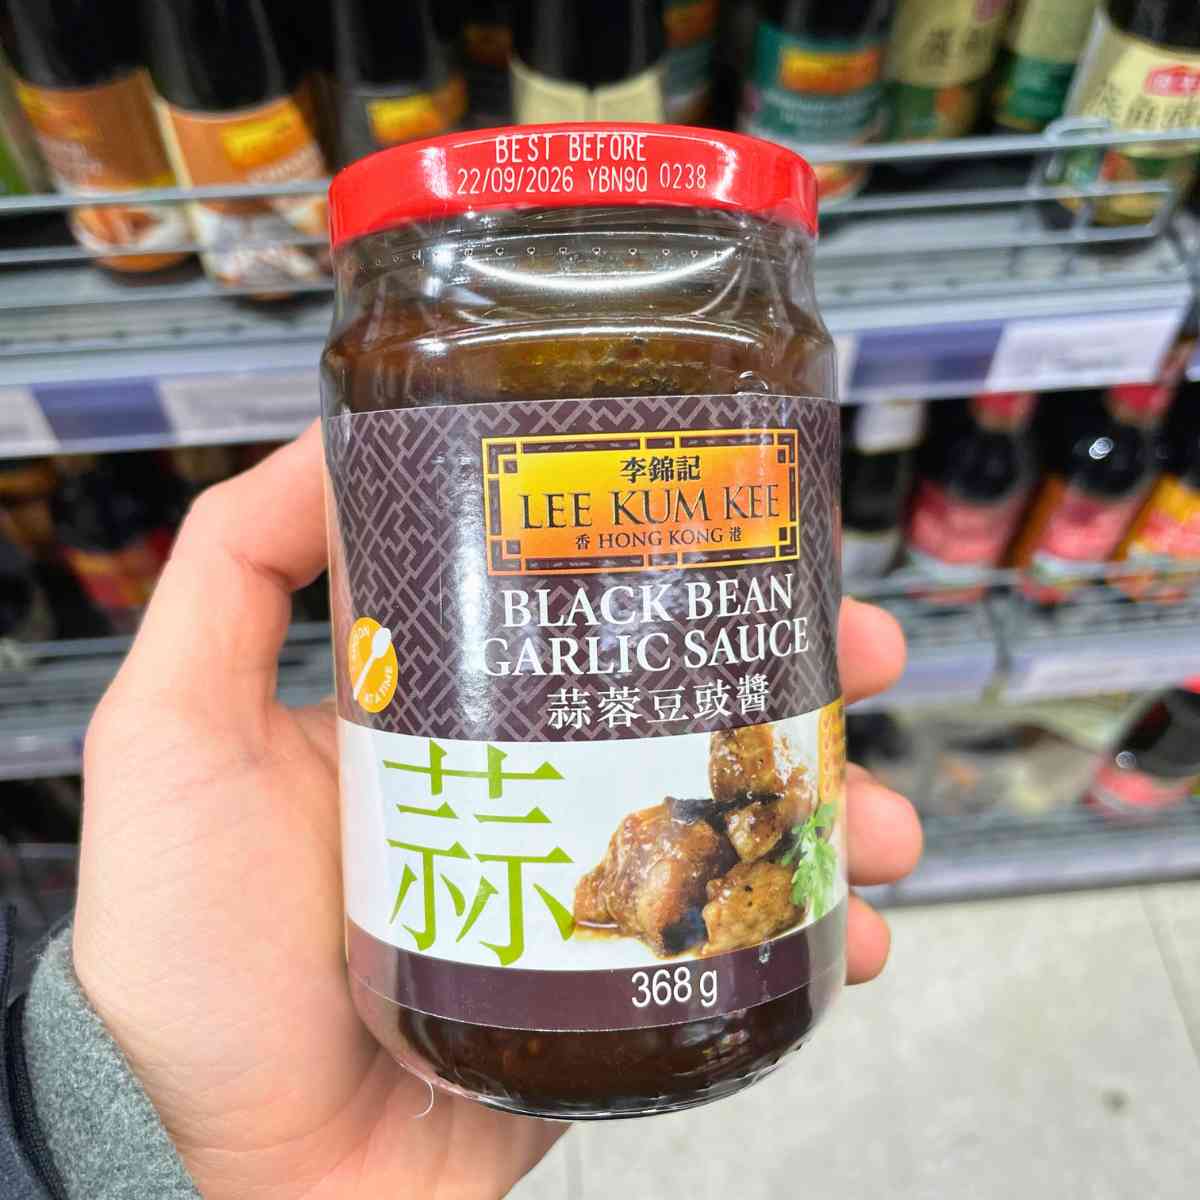 lee kum kee black bean garlic sauce